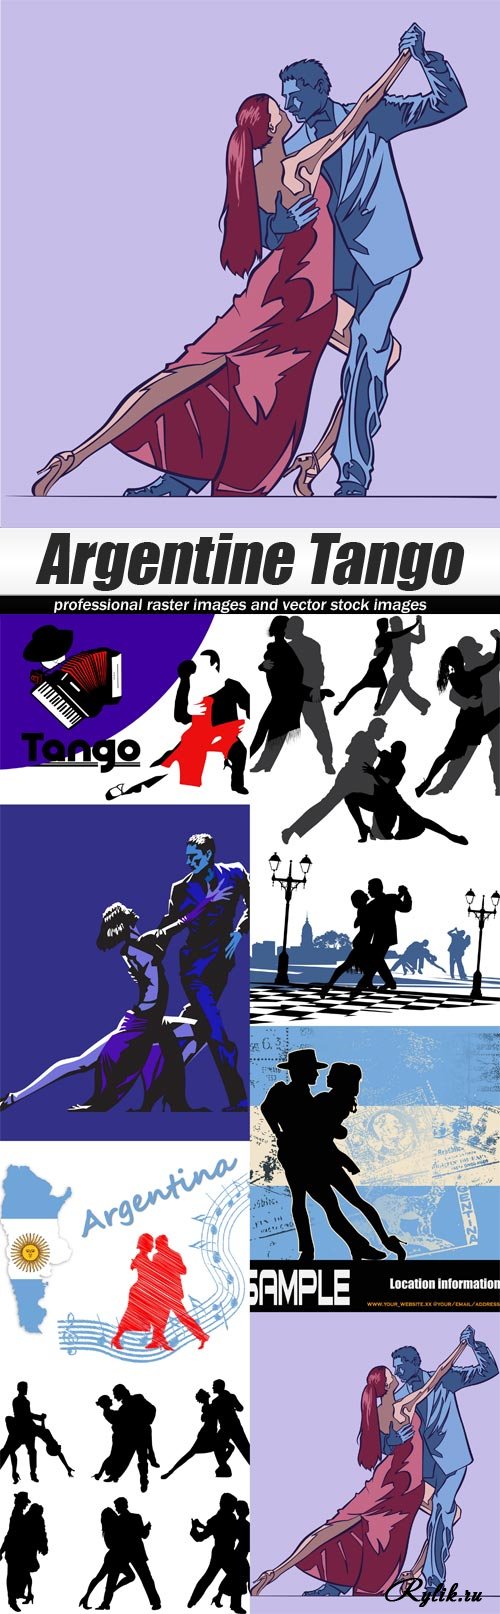                                   Argentine Tango